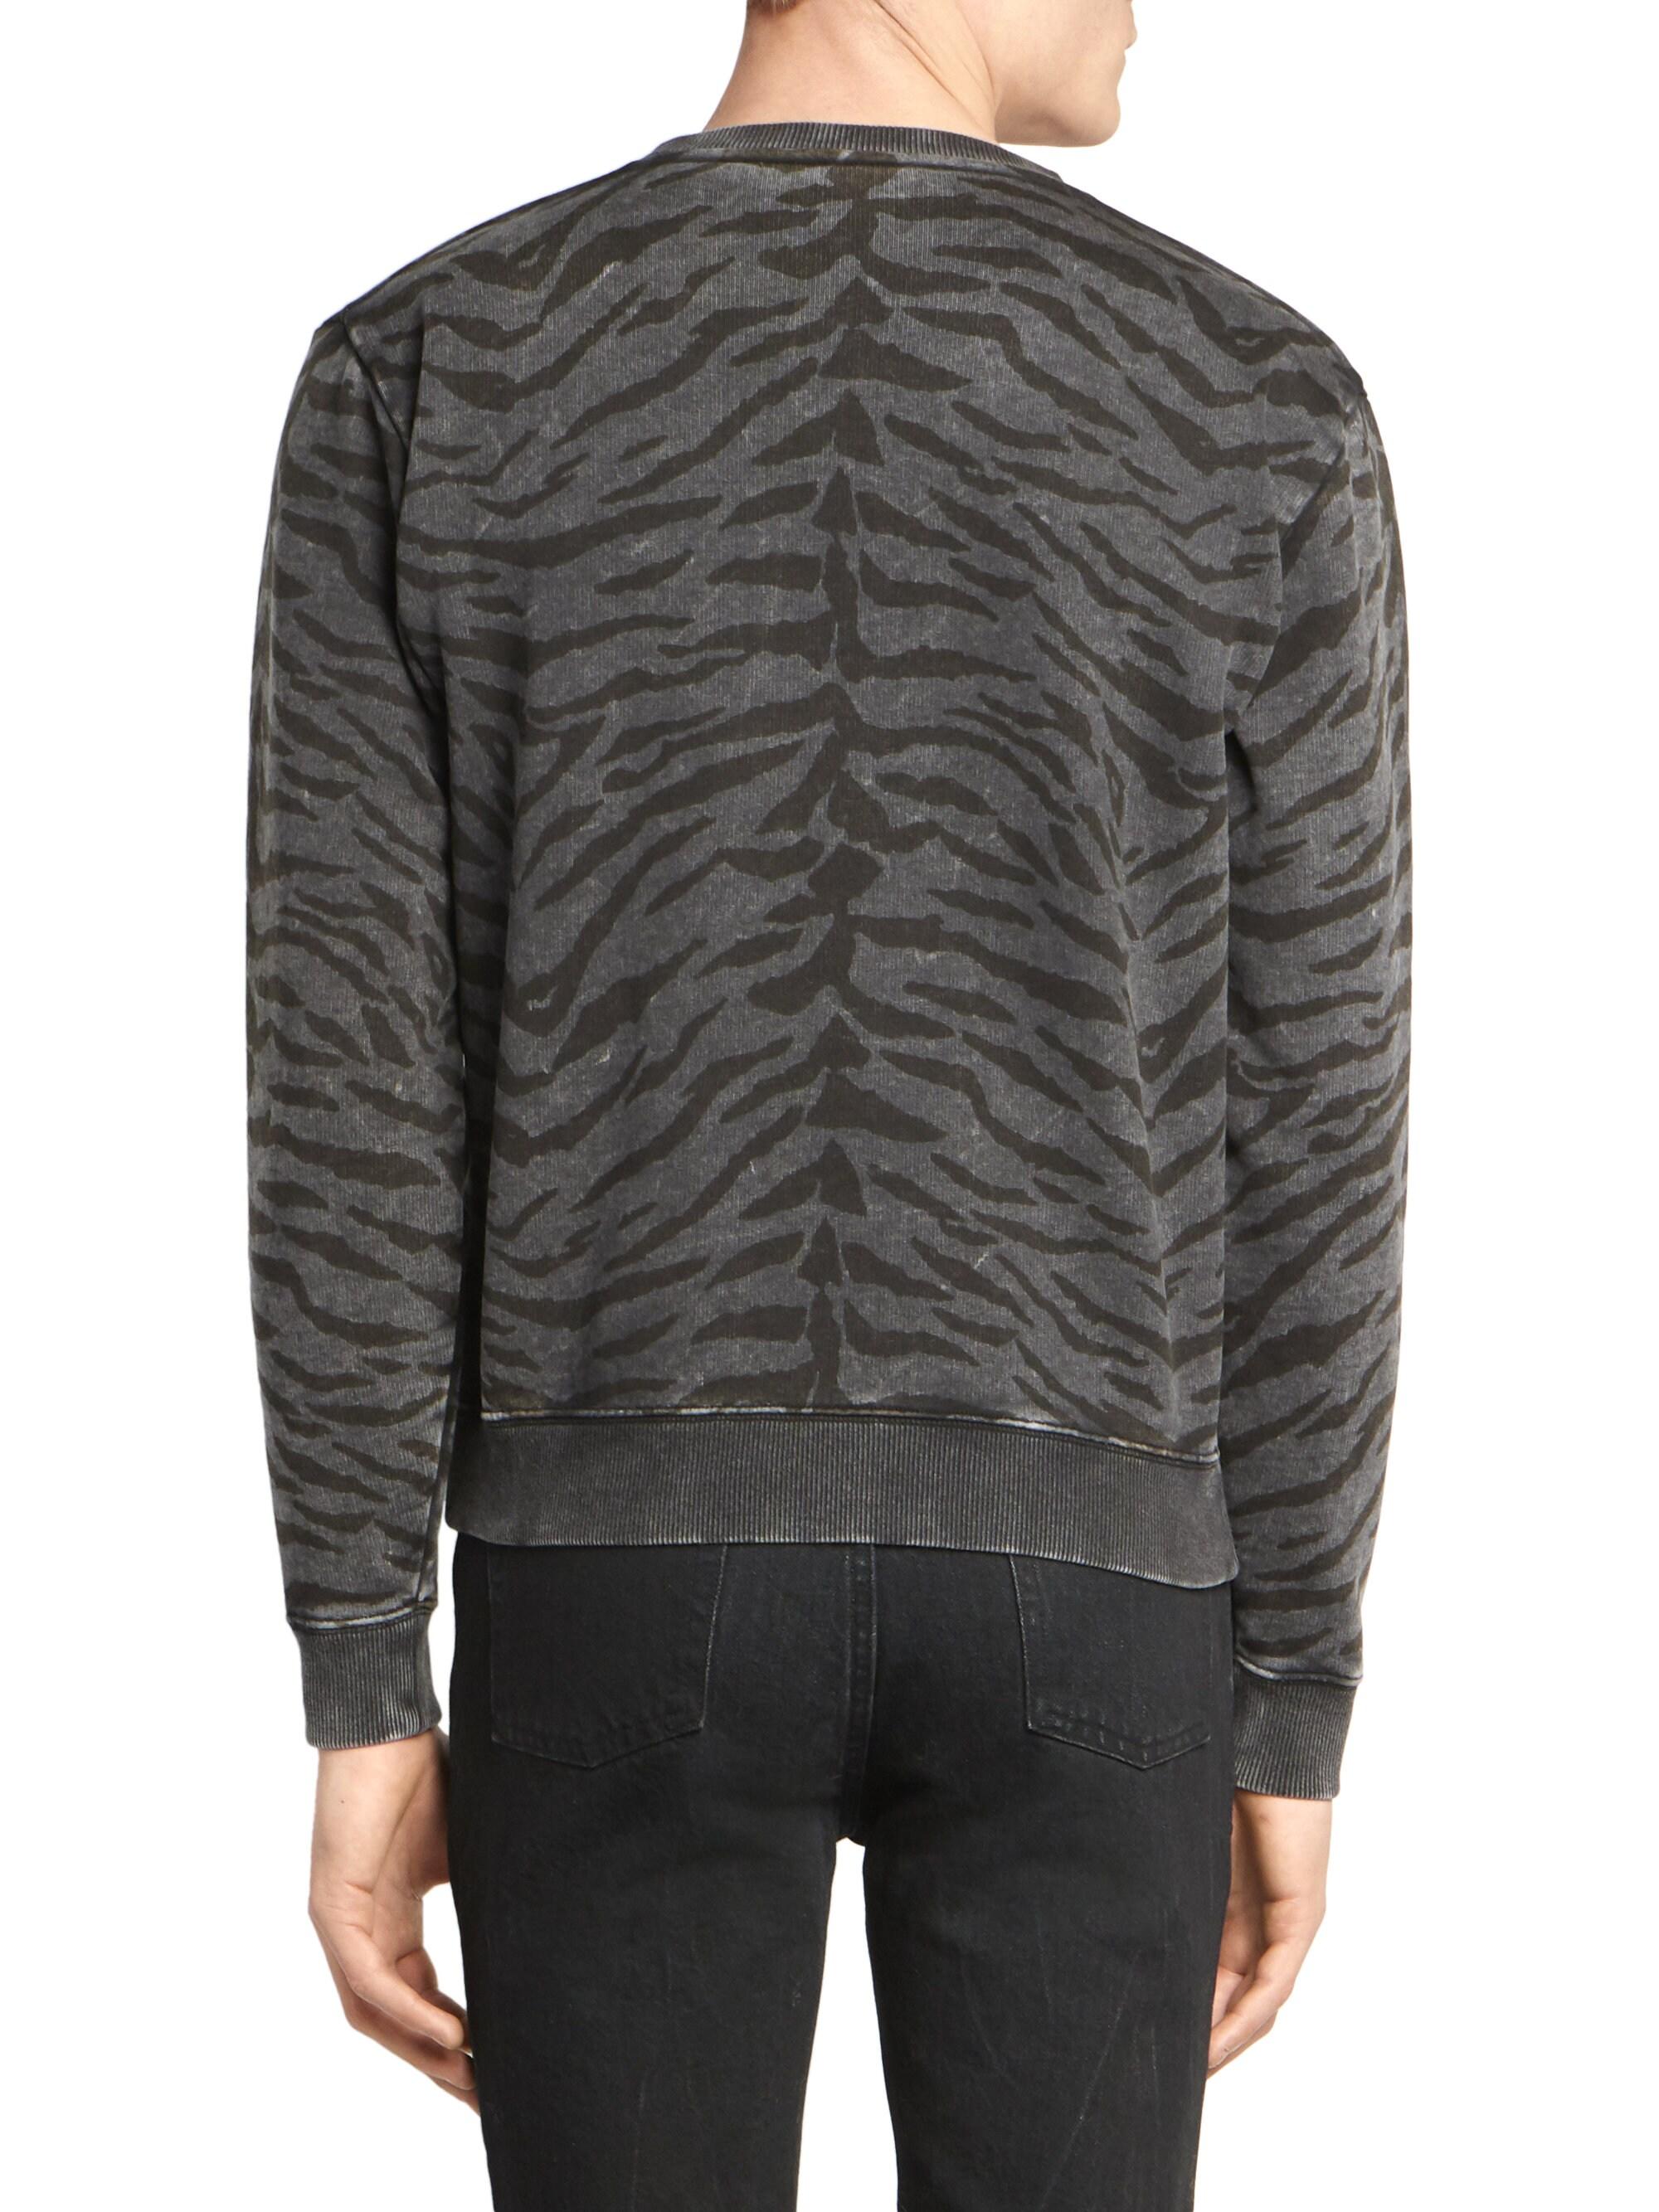 Saint Laurent Zebra Print Sweater in Black for Men - Lyst